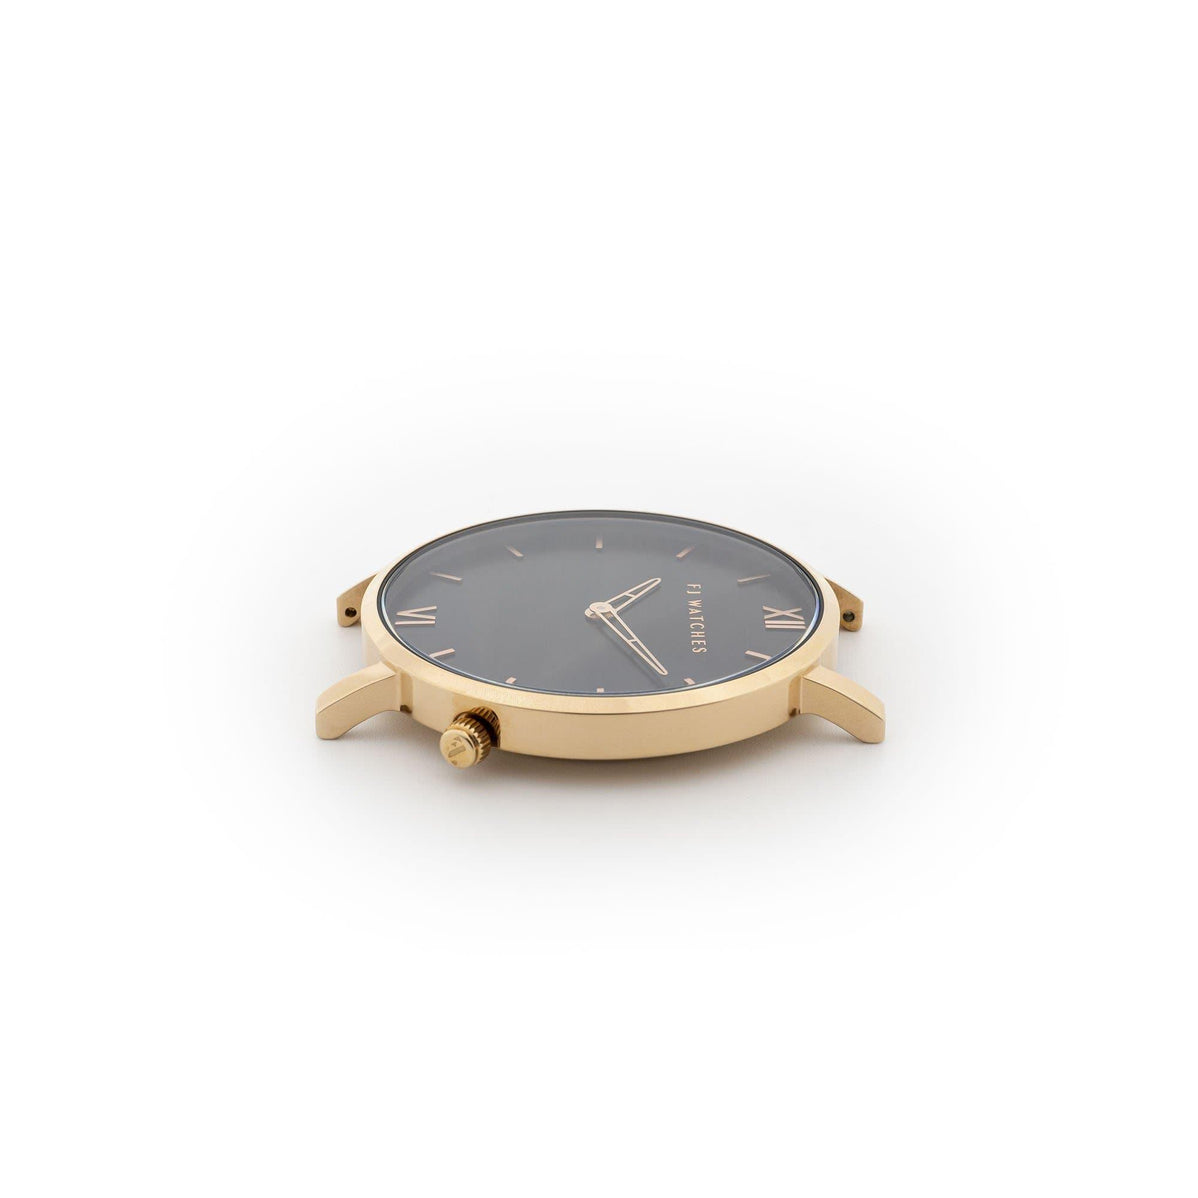 FJ Watches Golden moon black rose gold watch men 42mm minimalist dial